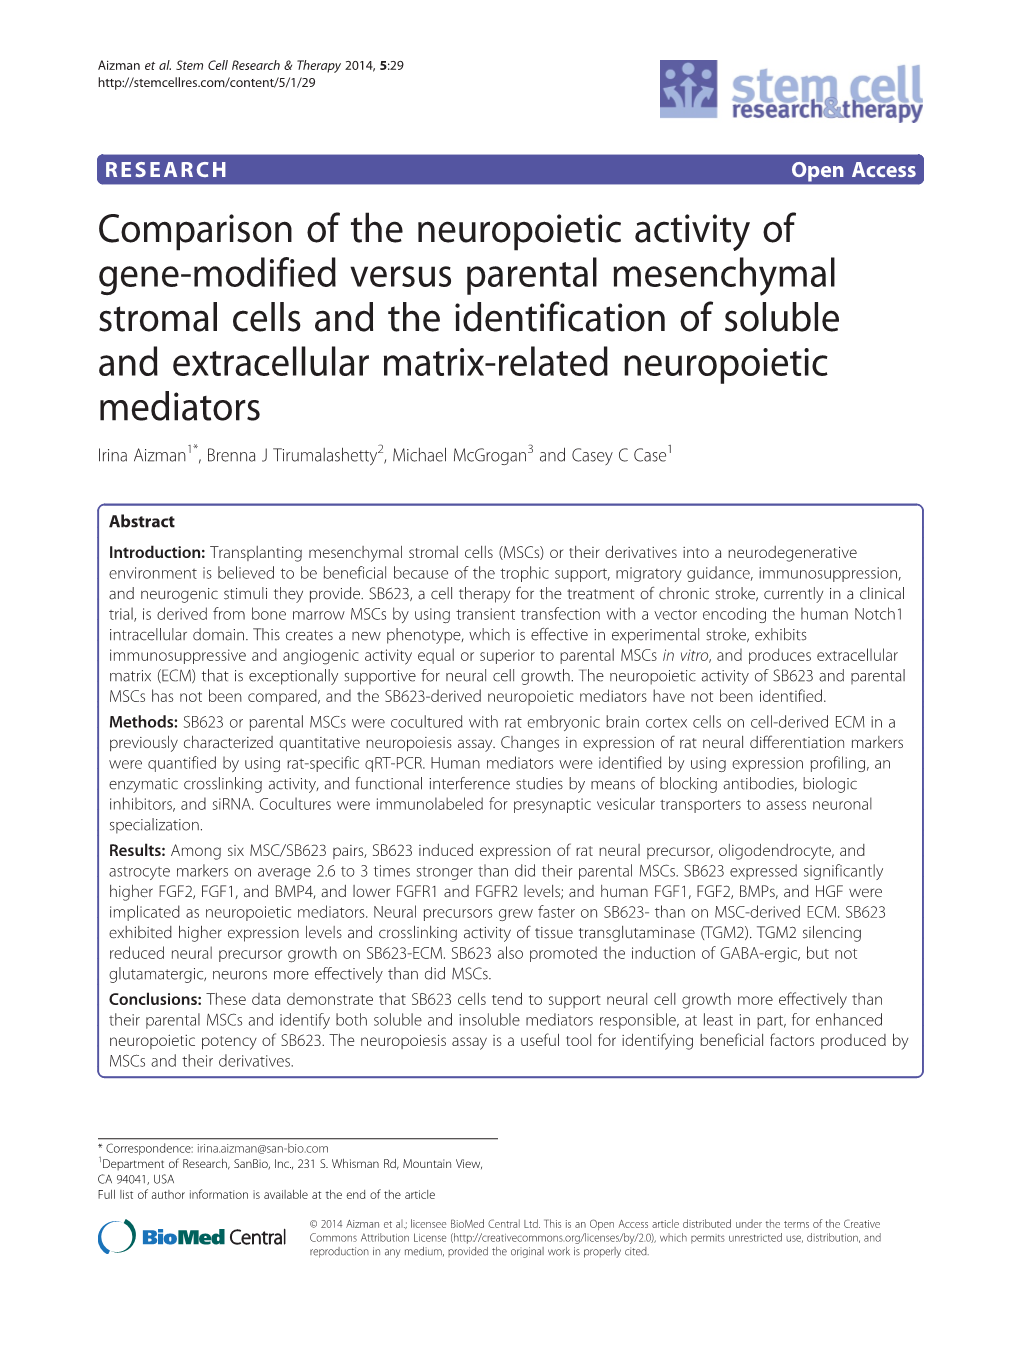 Comparison of the Neuropoietic Activity of Gene-Modified Versus